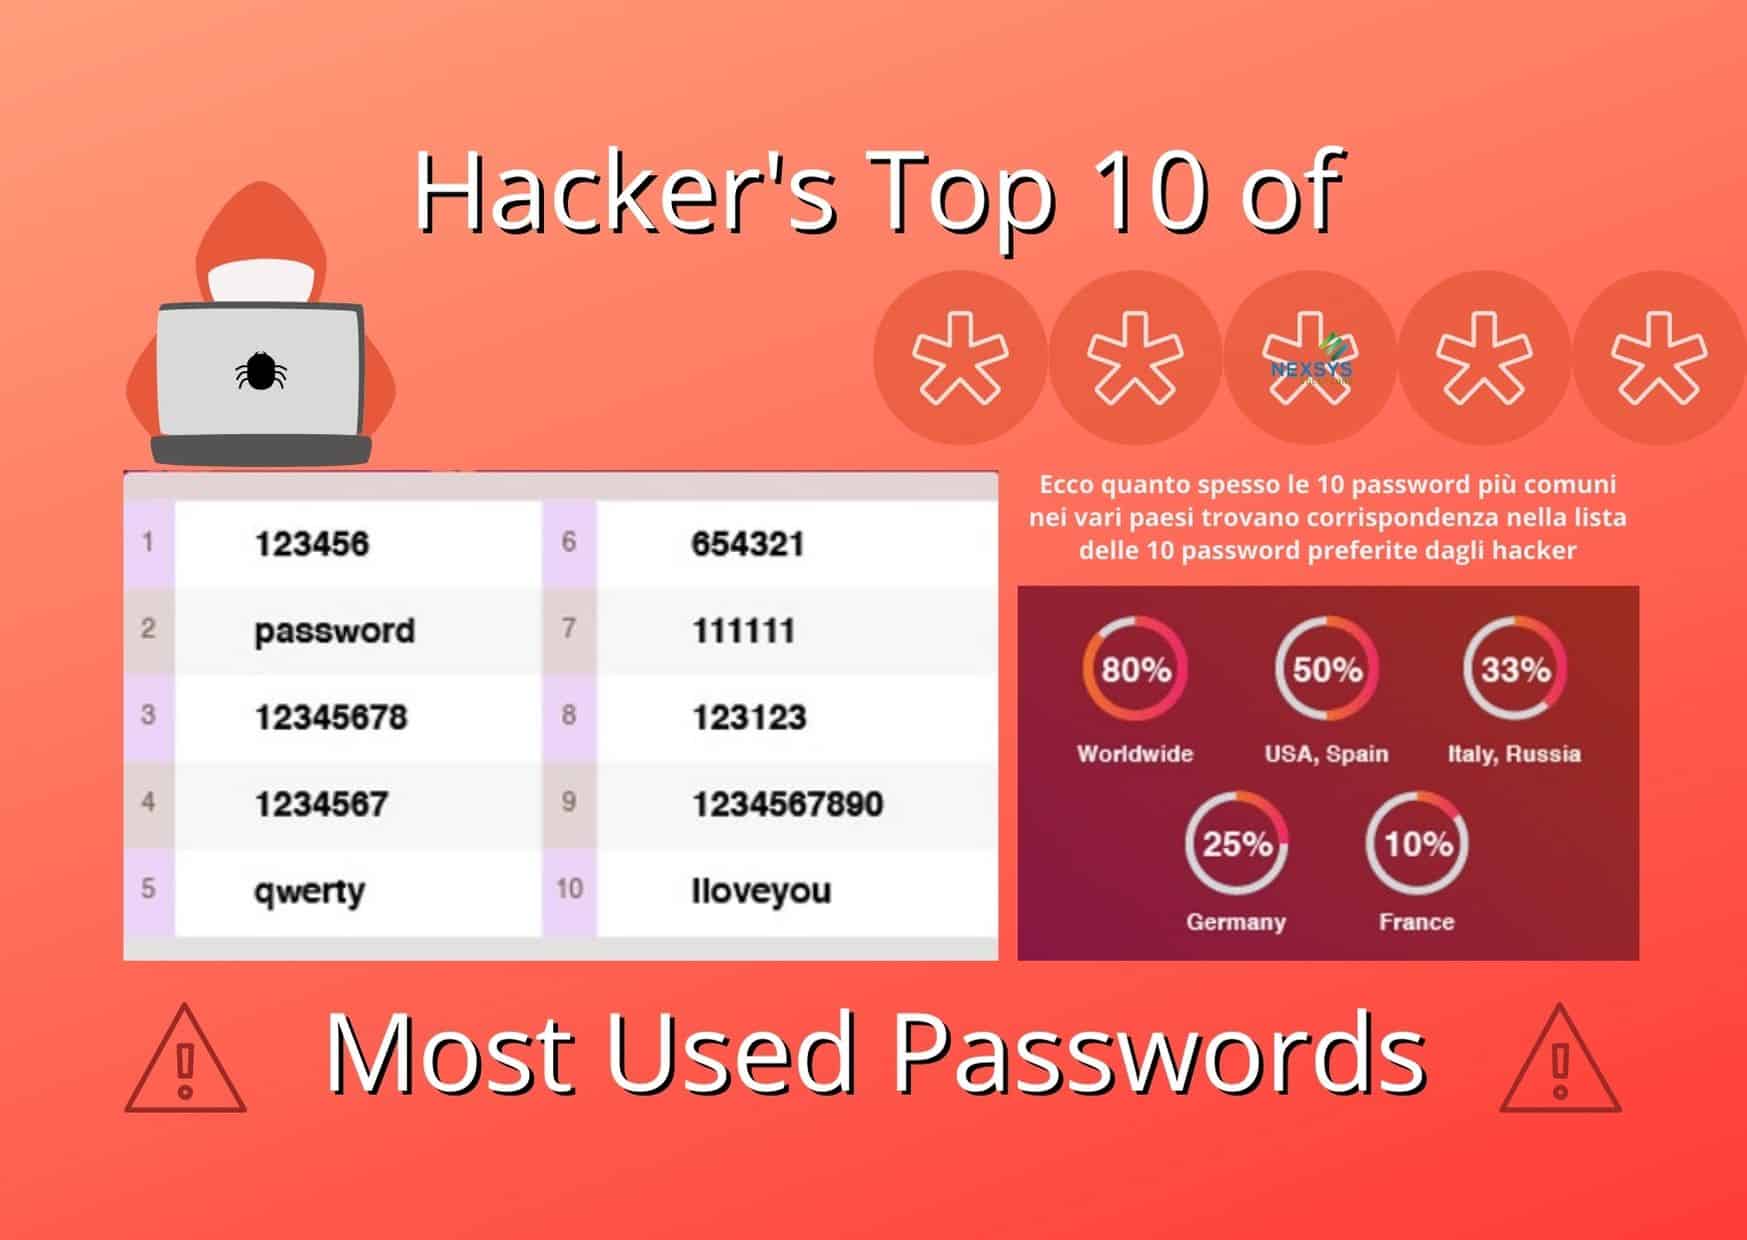 Hacker's top 10 of most used passwords